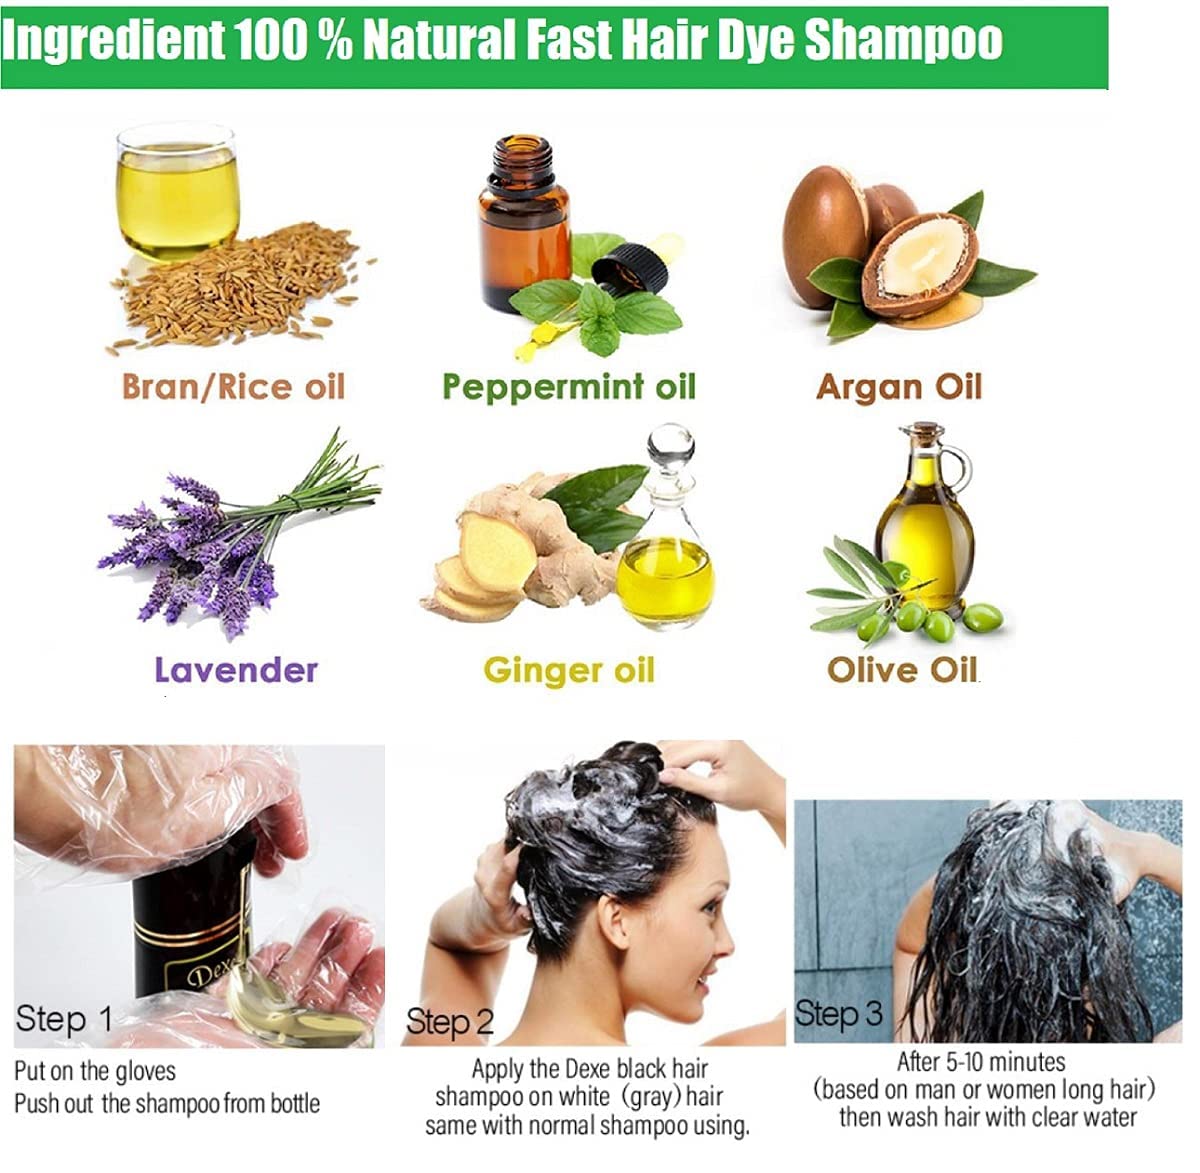 Mua Black Hair Shampoo-400ml Dexe Instant Black Hair Shampoo for Natural  Hair,Temporary Hair Dye Shampoo for Men Women Black Color/Simple to  Use/Lasts 30 Days-Fast Acting Natural Ingredients trên Amazon Mỹ chính hãng